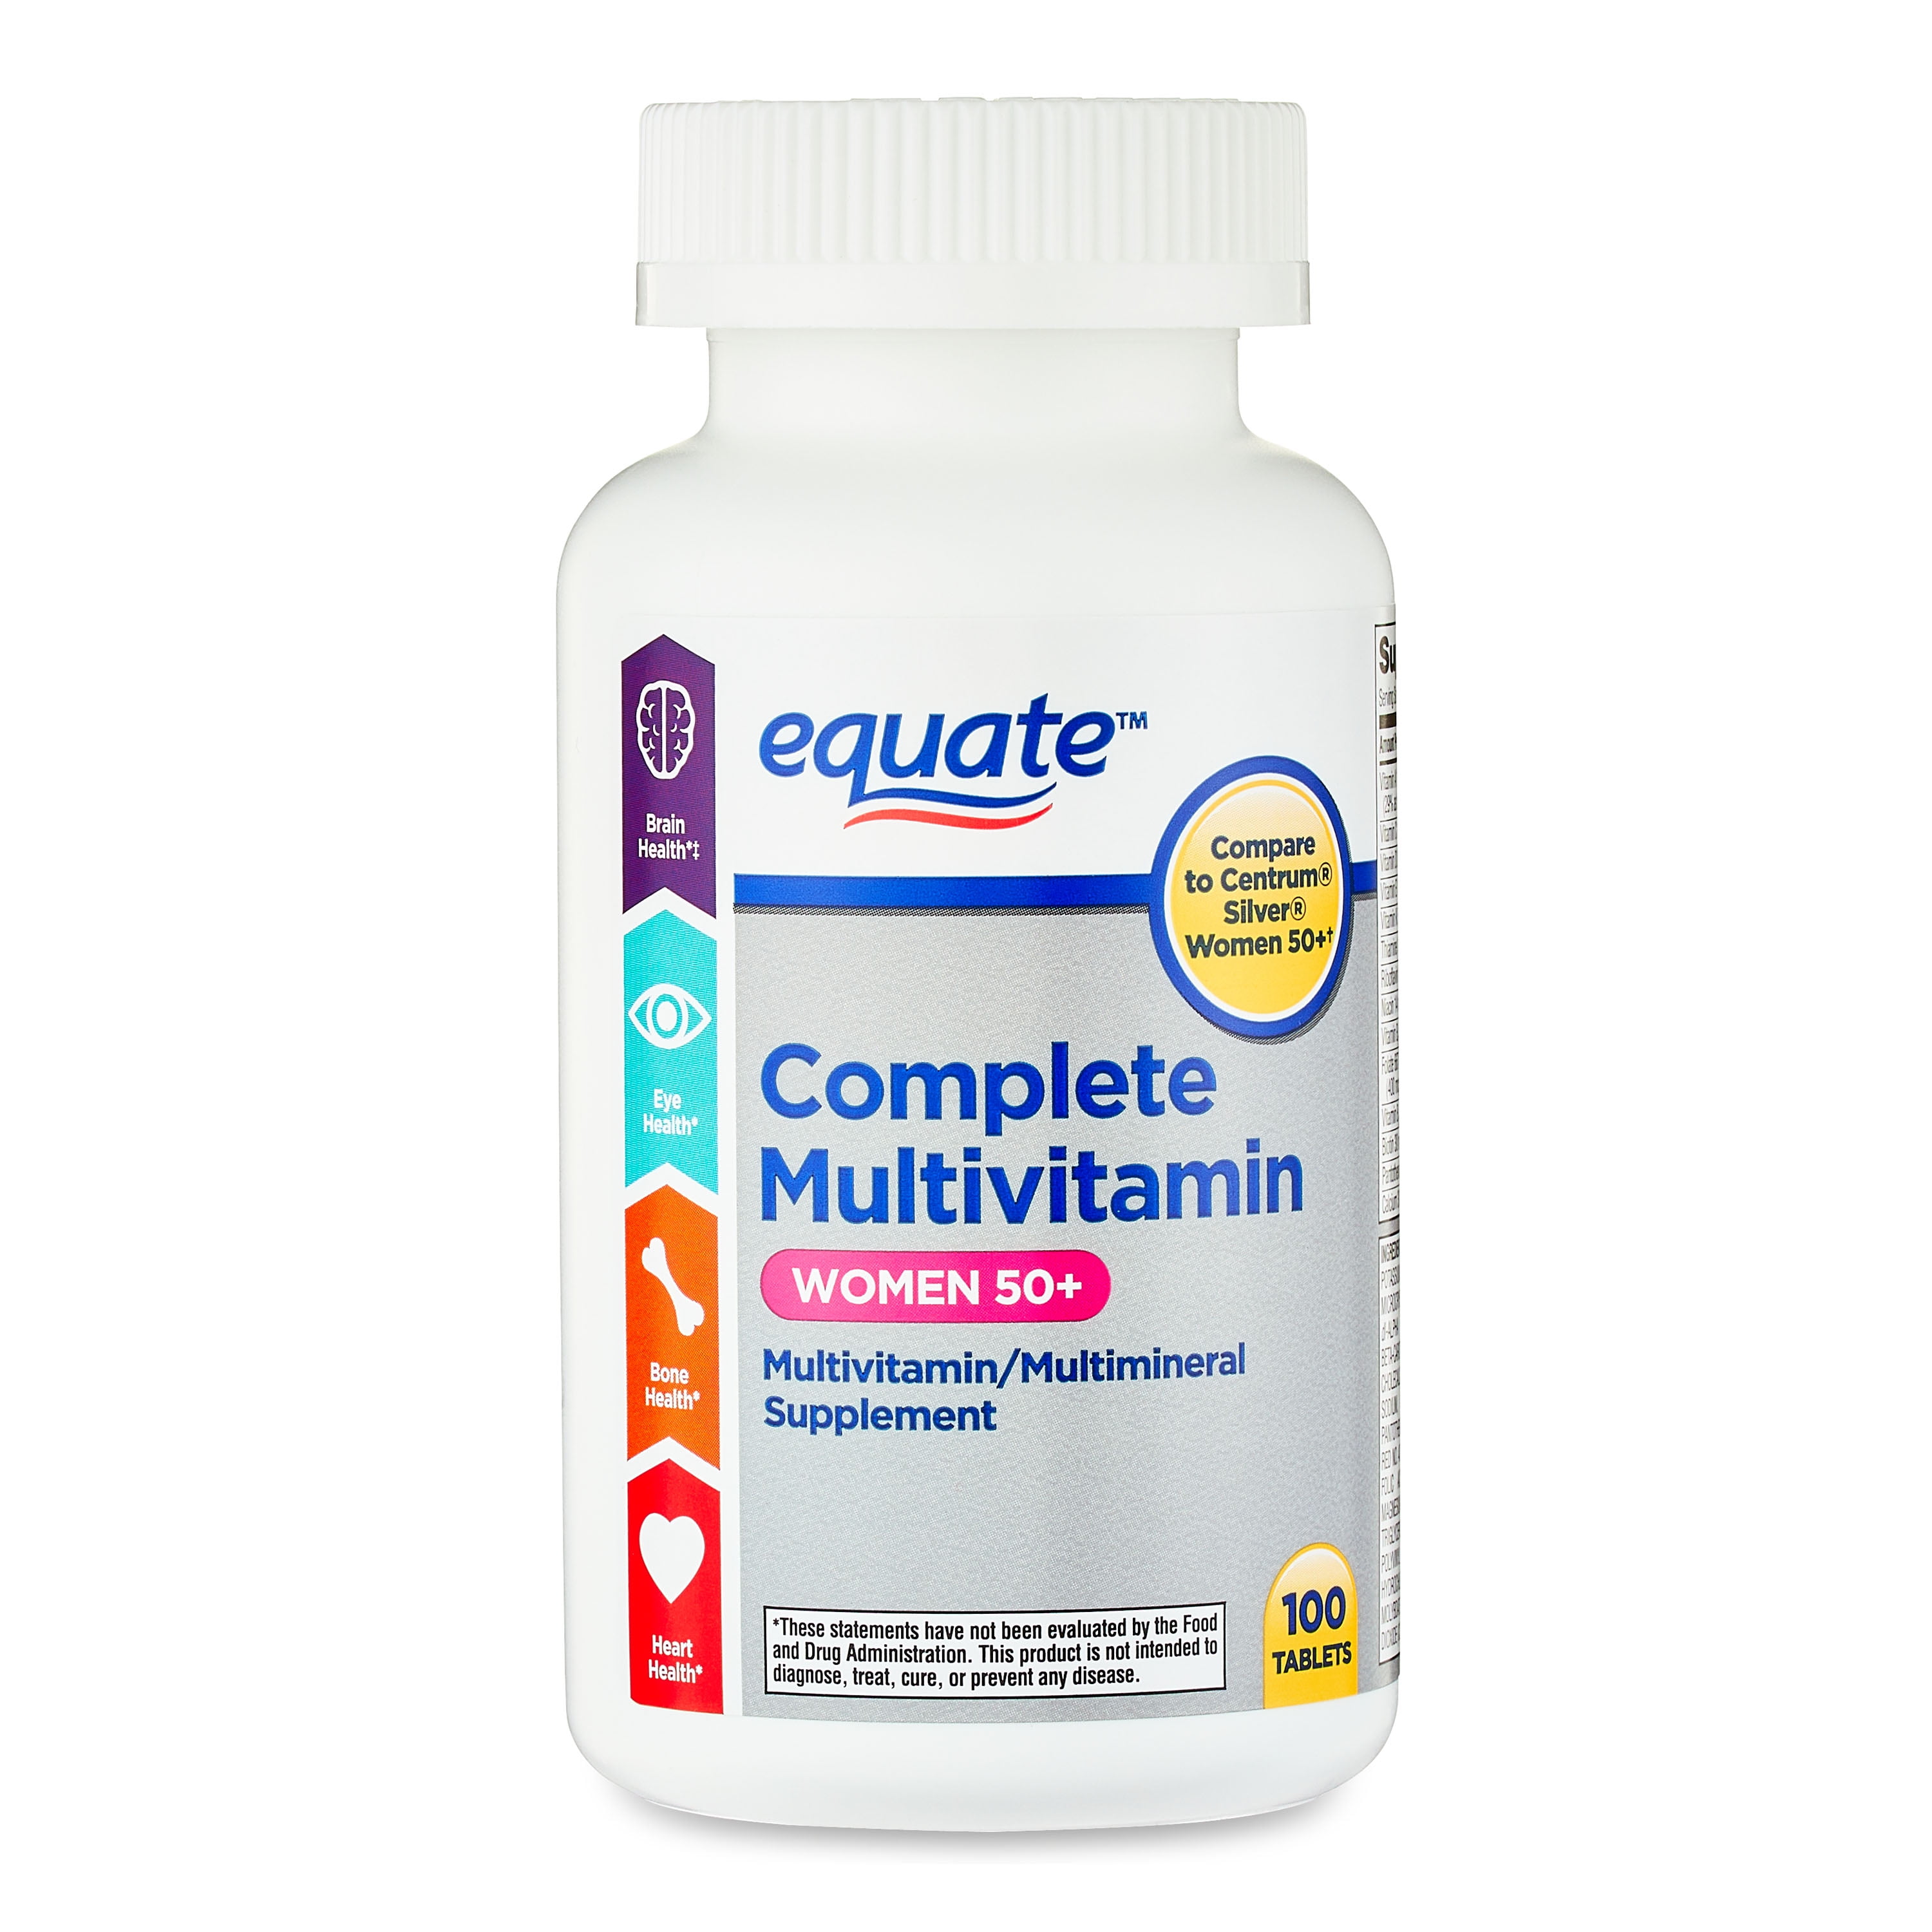 Equate Complete Multivitamin/Multimineral Supplement Tablets